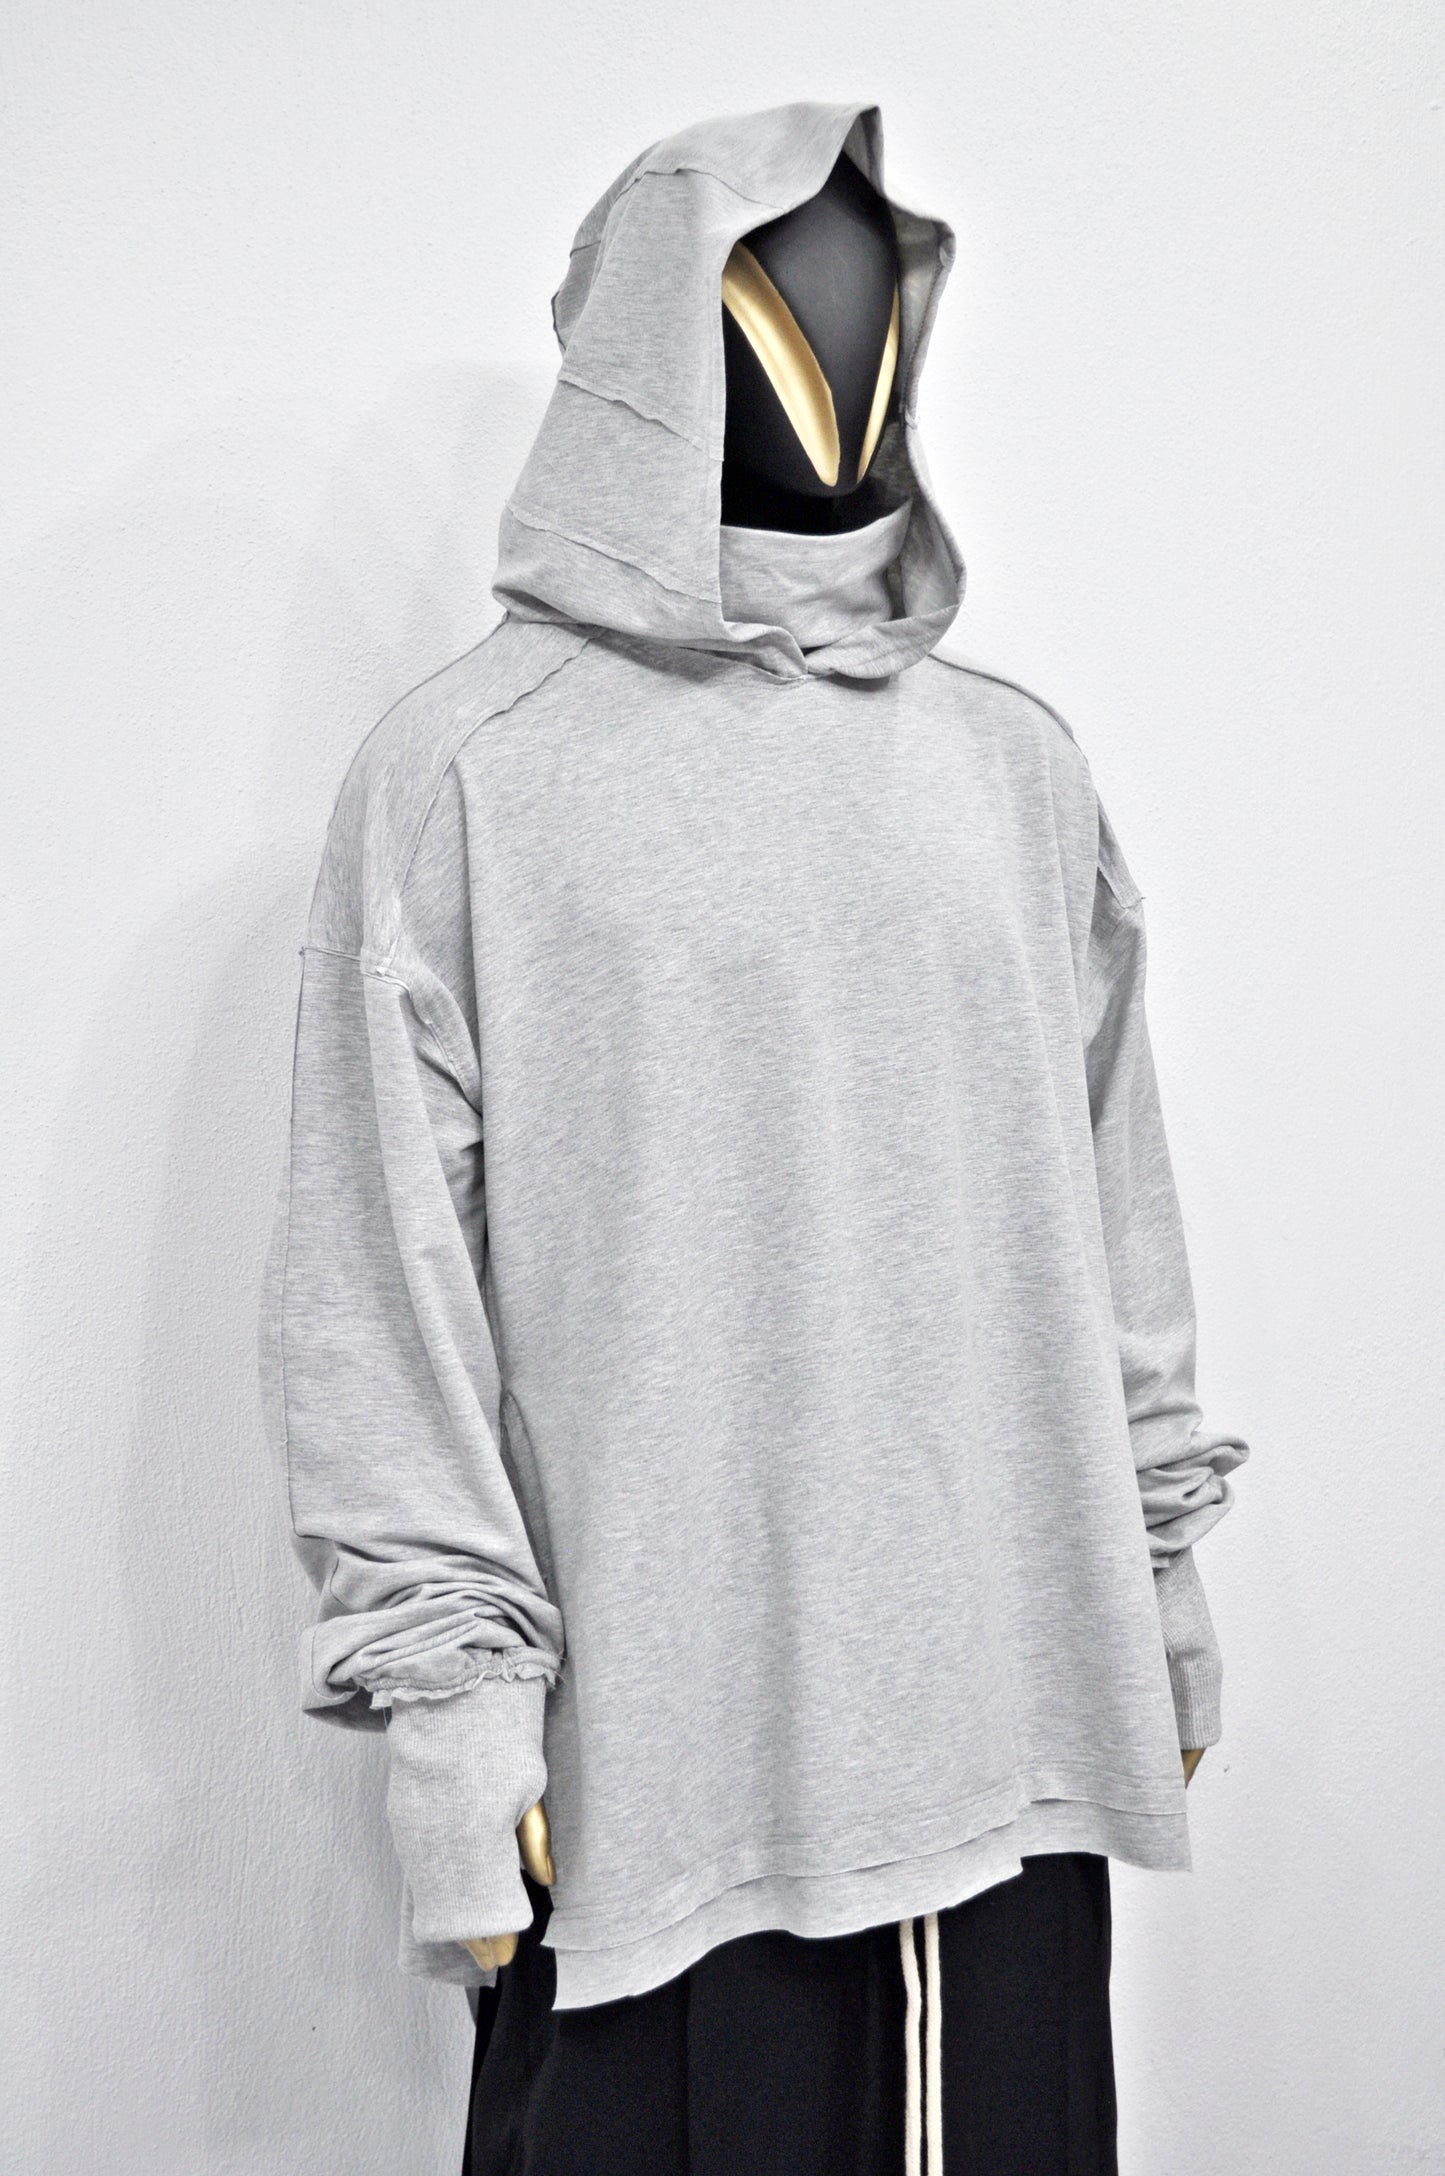 XS-8XL Men's Distressed Structured Silhouette Hooded Turtleneck Sweatshirt,Ashassin Asymetrical Cardigan,Cyber Futuristic Burning Man-BB0159